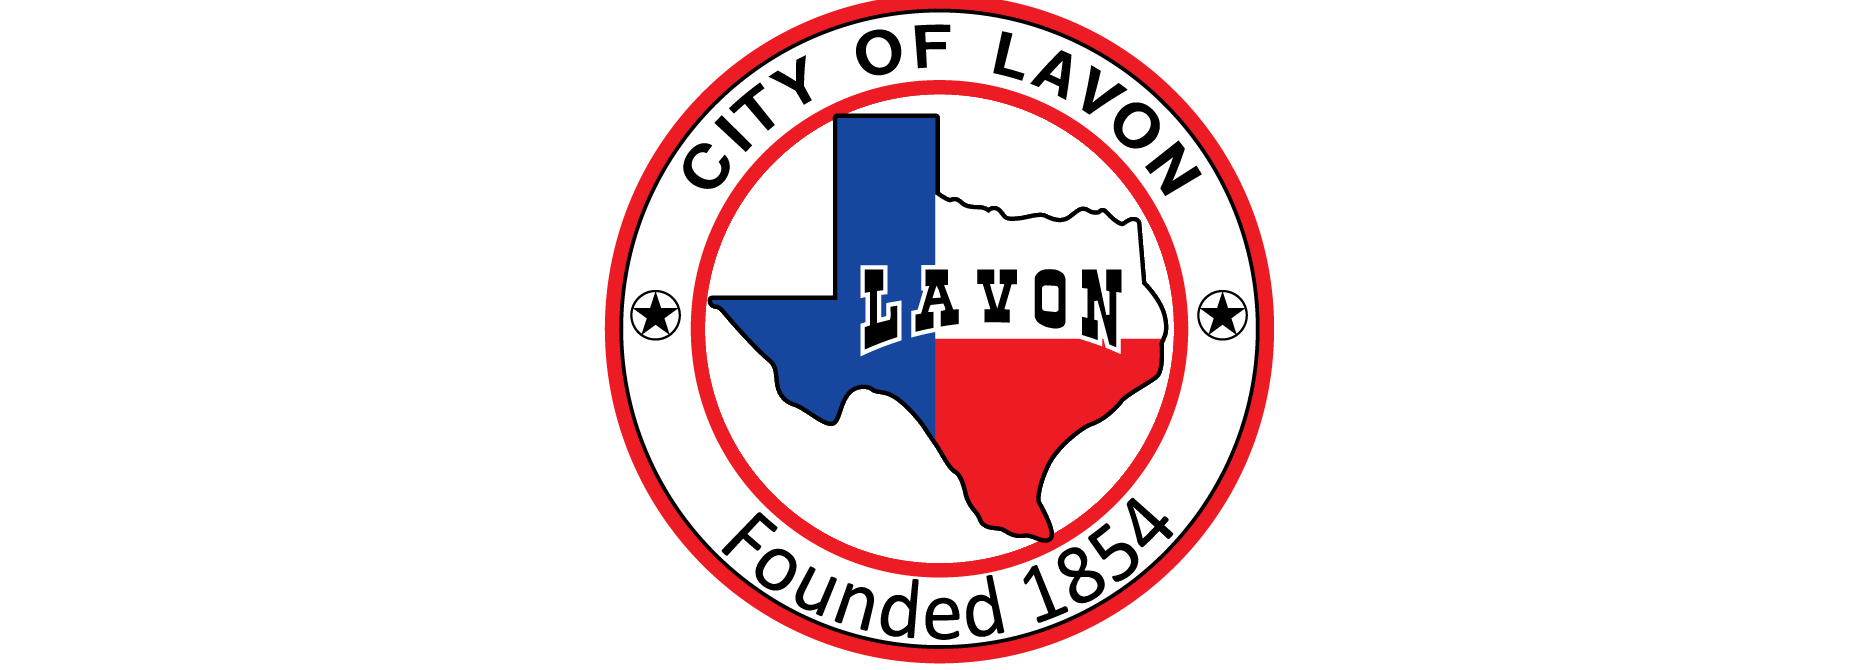 City of Lavon